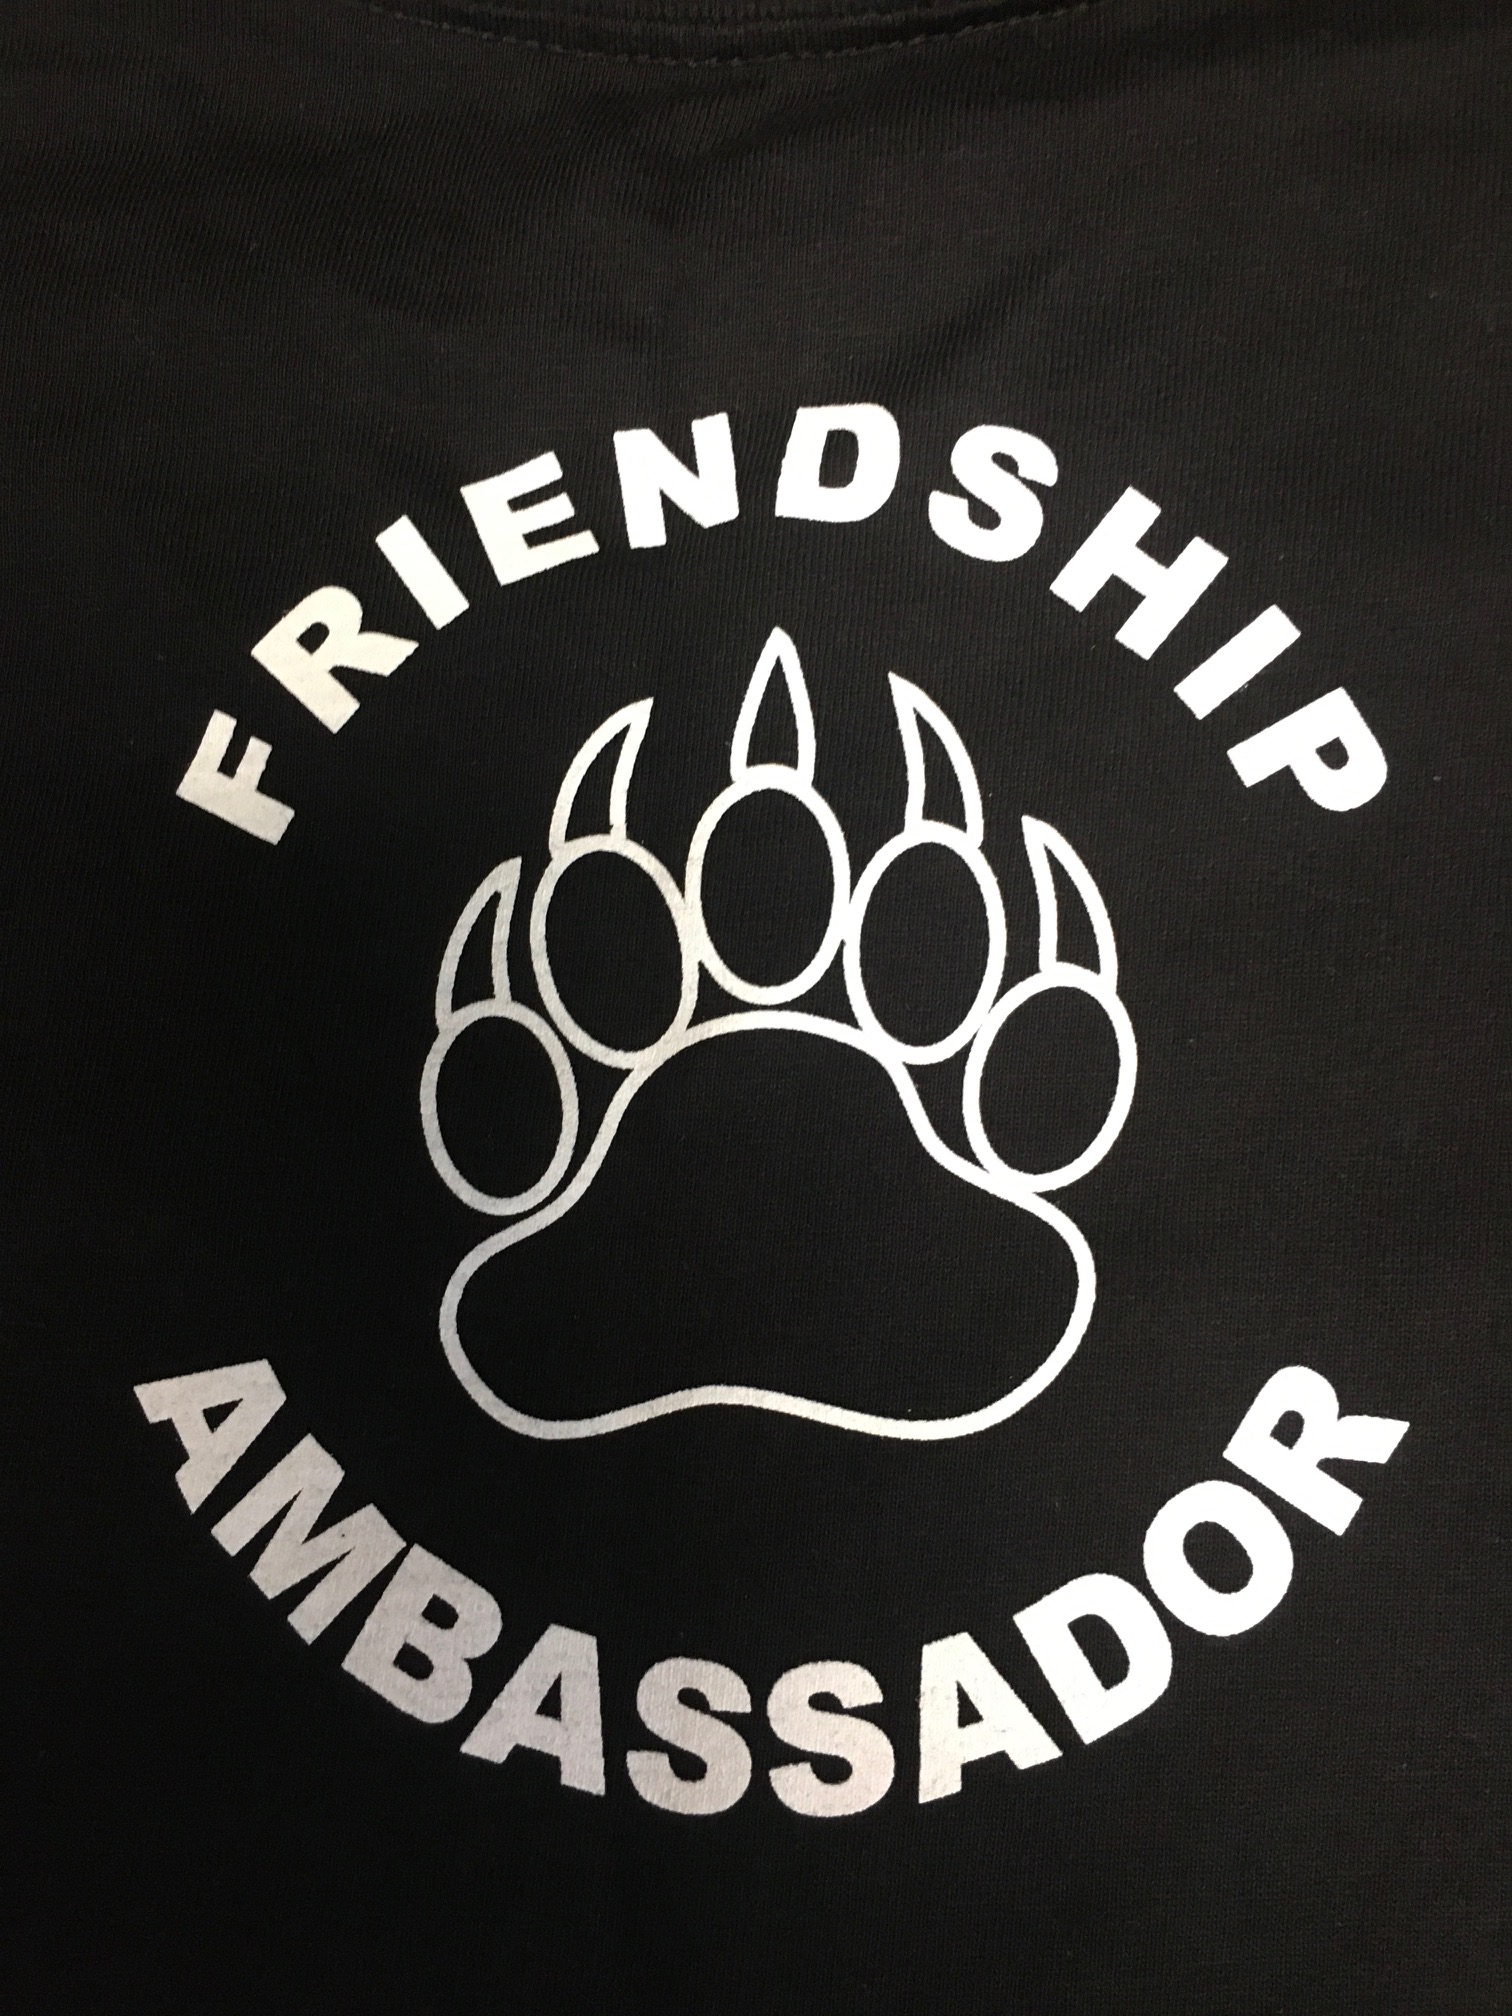 Friendship Ambassador